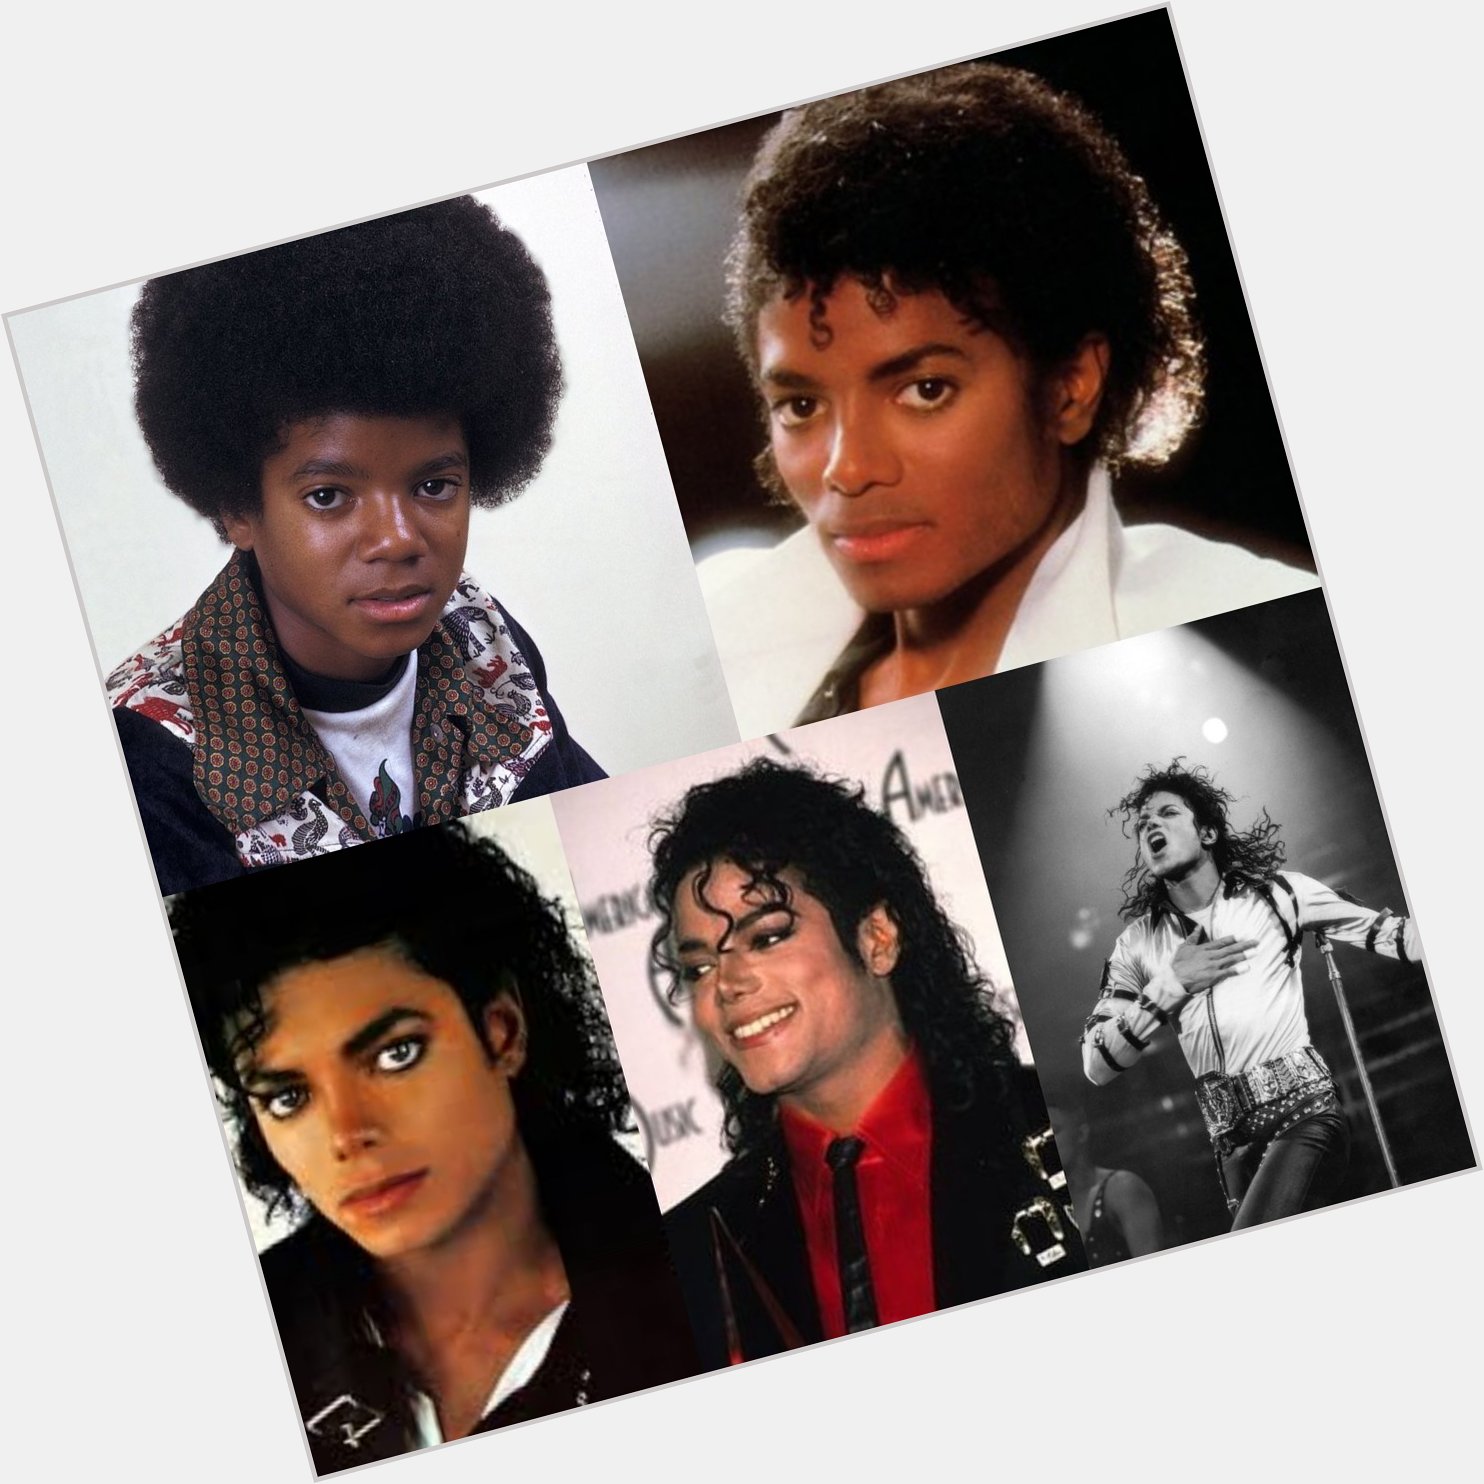 Happy Birthday Michael Jackson.

King of Pop.

RIP. 